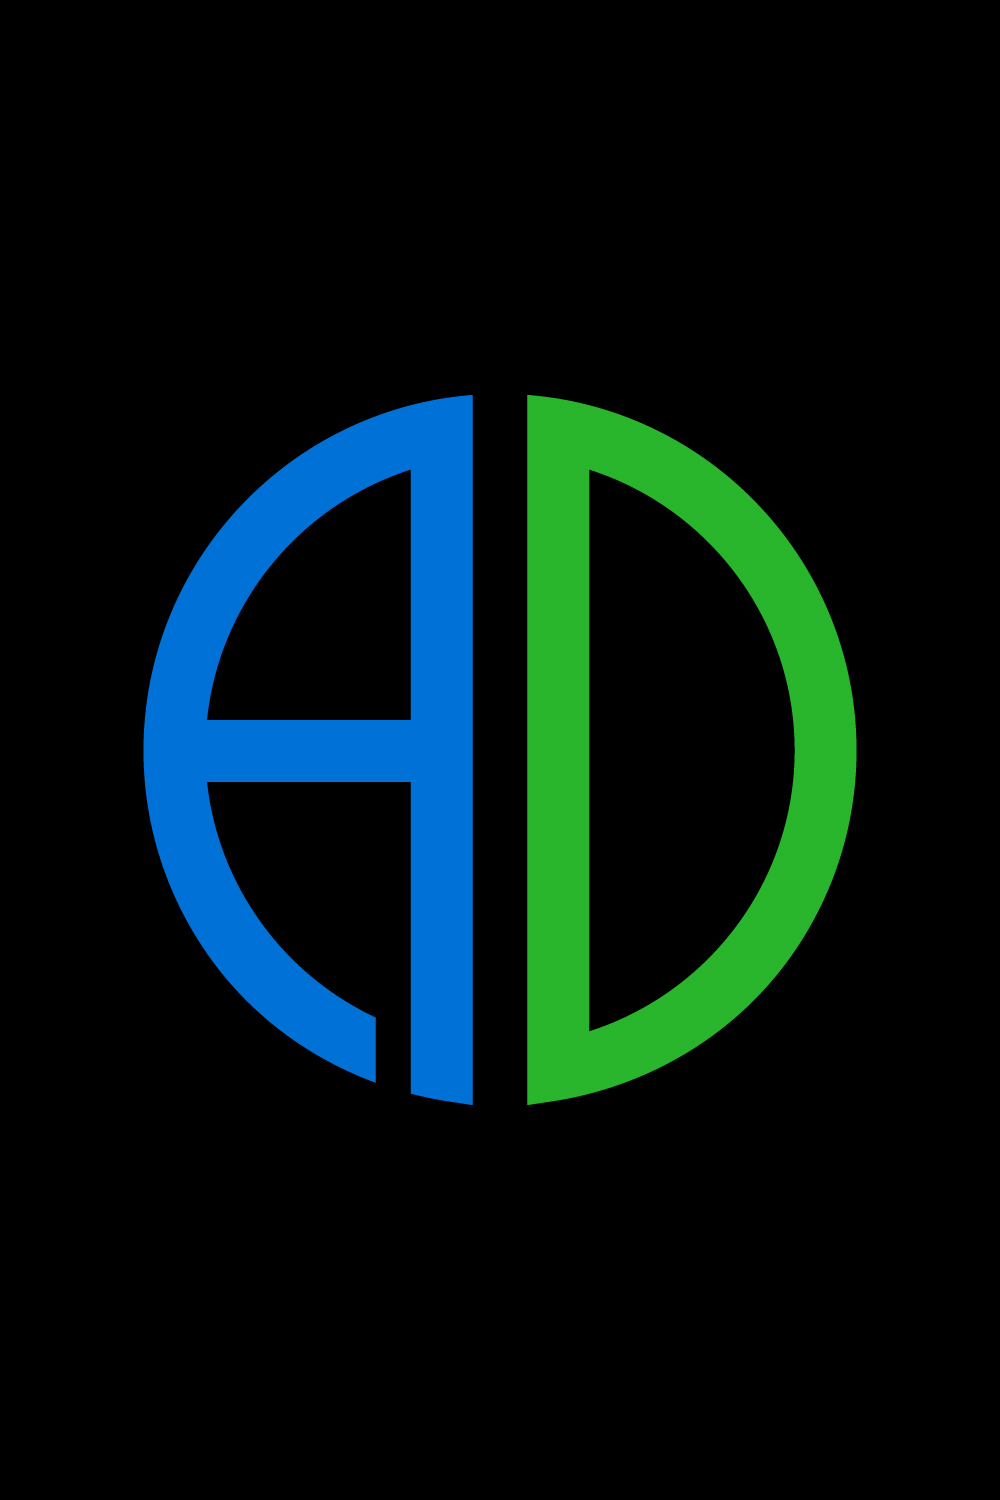 Initial AD Letter logo design, Vector design concept pinterest preview image.